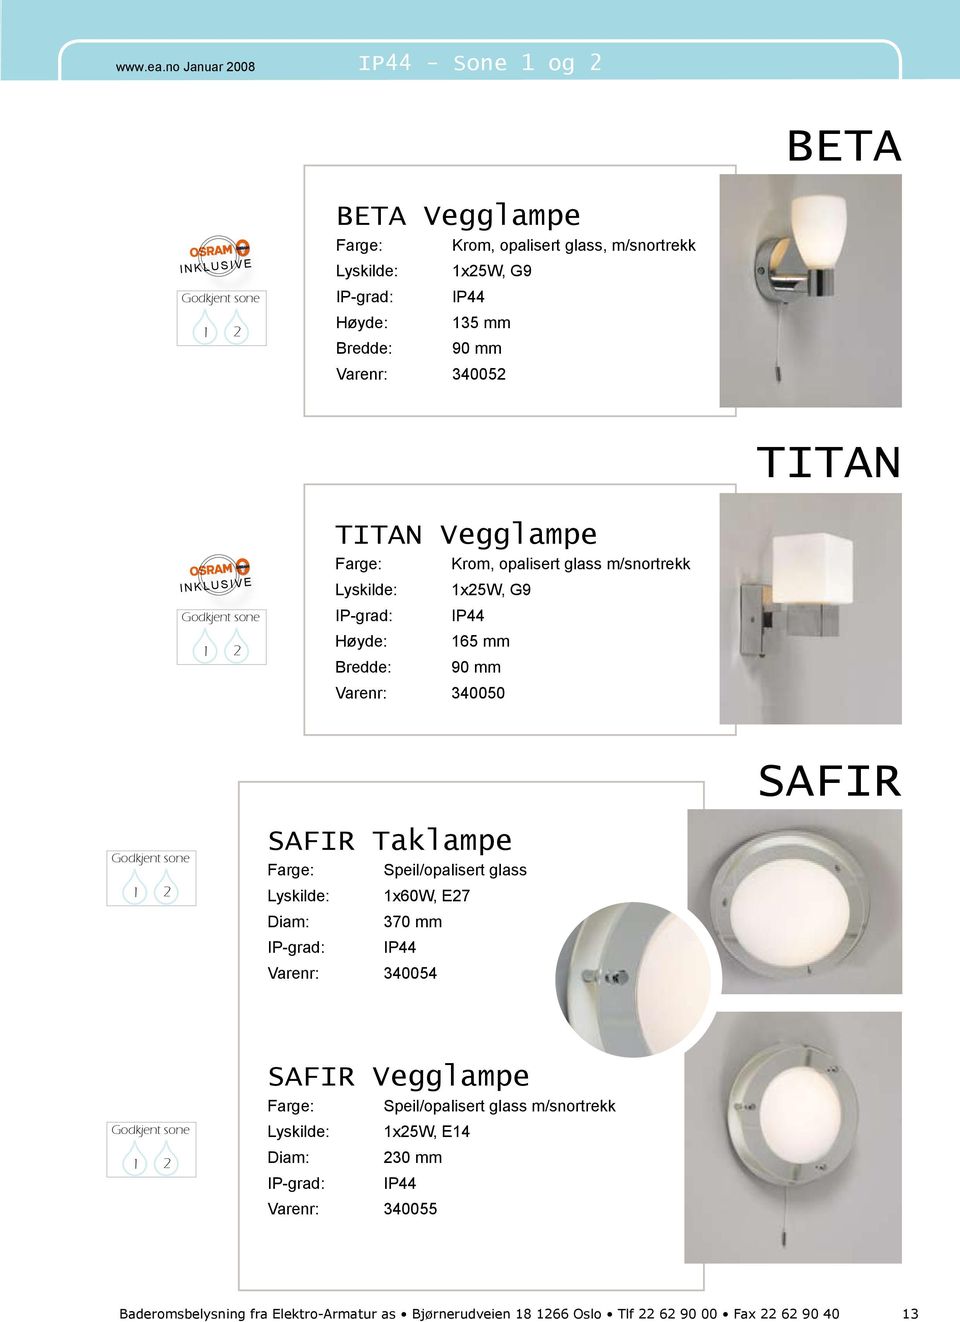 Speil/opalisert glass Diam: 1x60W, E27 370 mm Varenr: 340054 SAFIR Vegglampe Farge: Speil/opalisert glass m/snortrekk Diam: